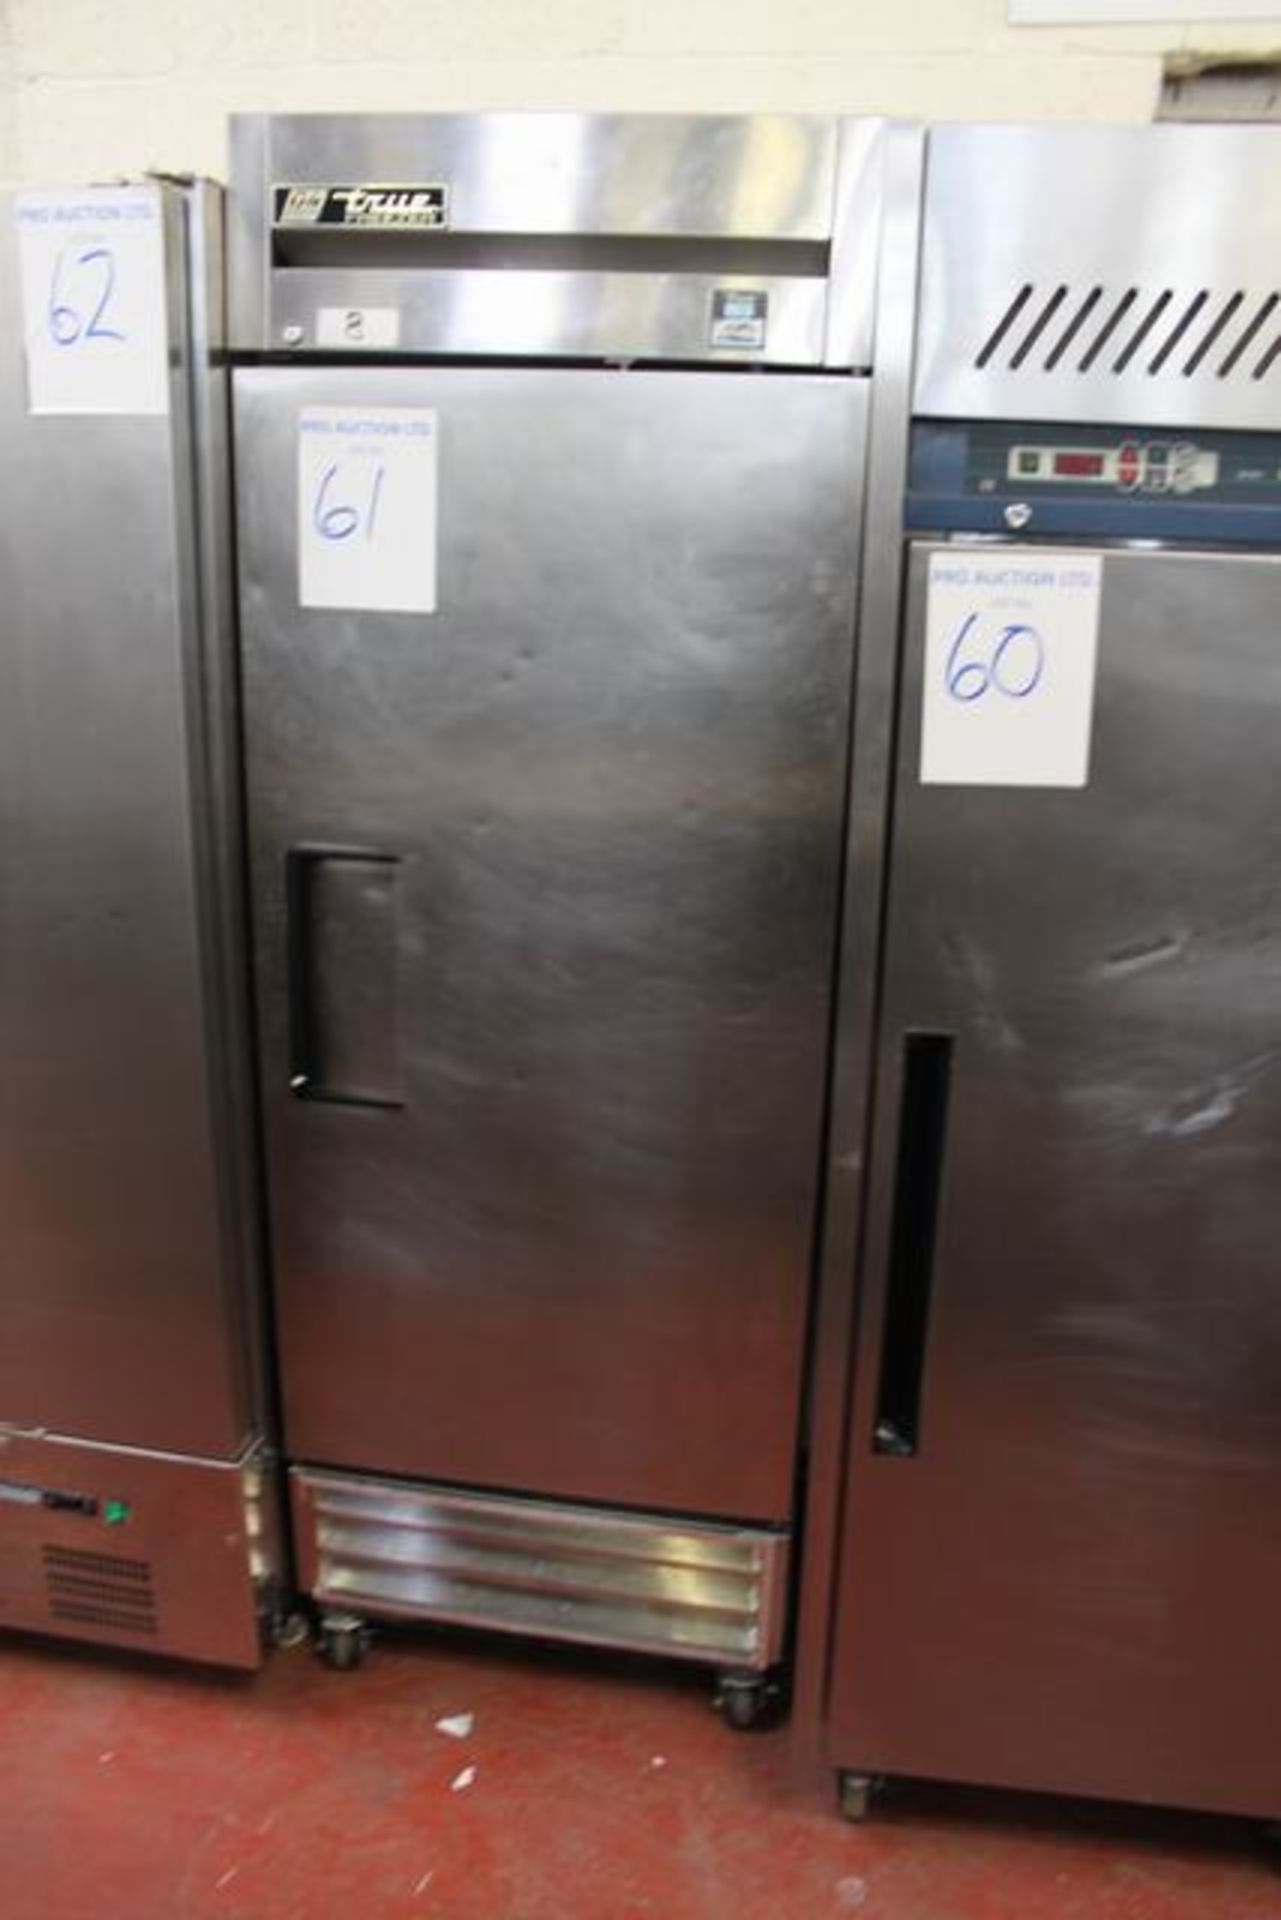 True T-19E upright refrigerator stainless steel front single door upright refrigerator interior